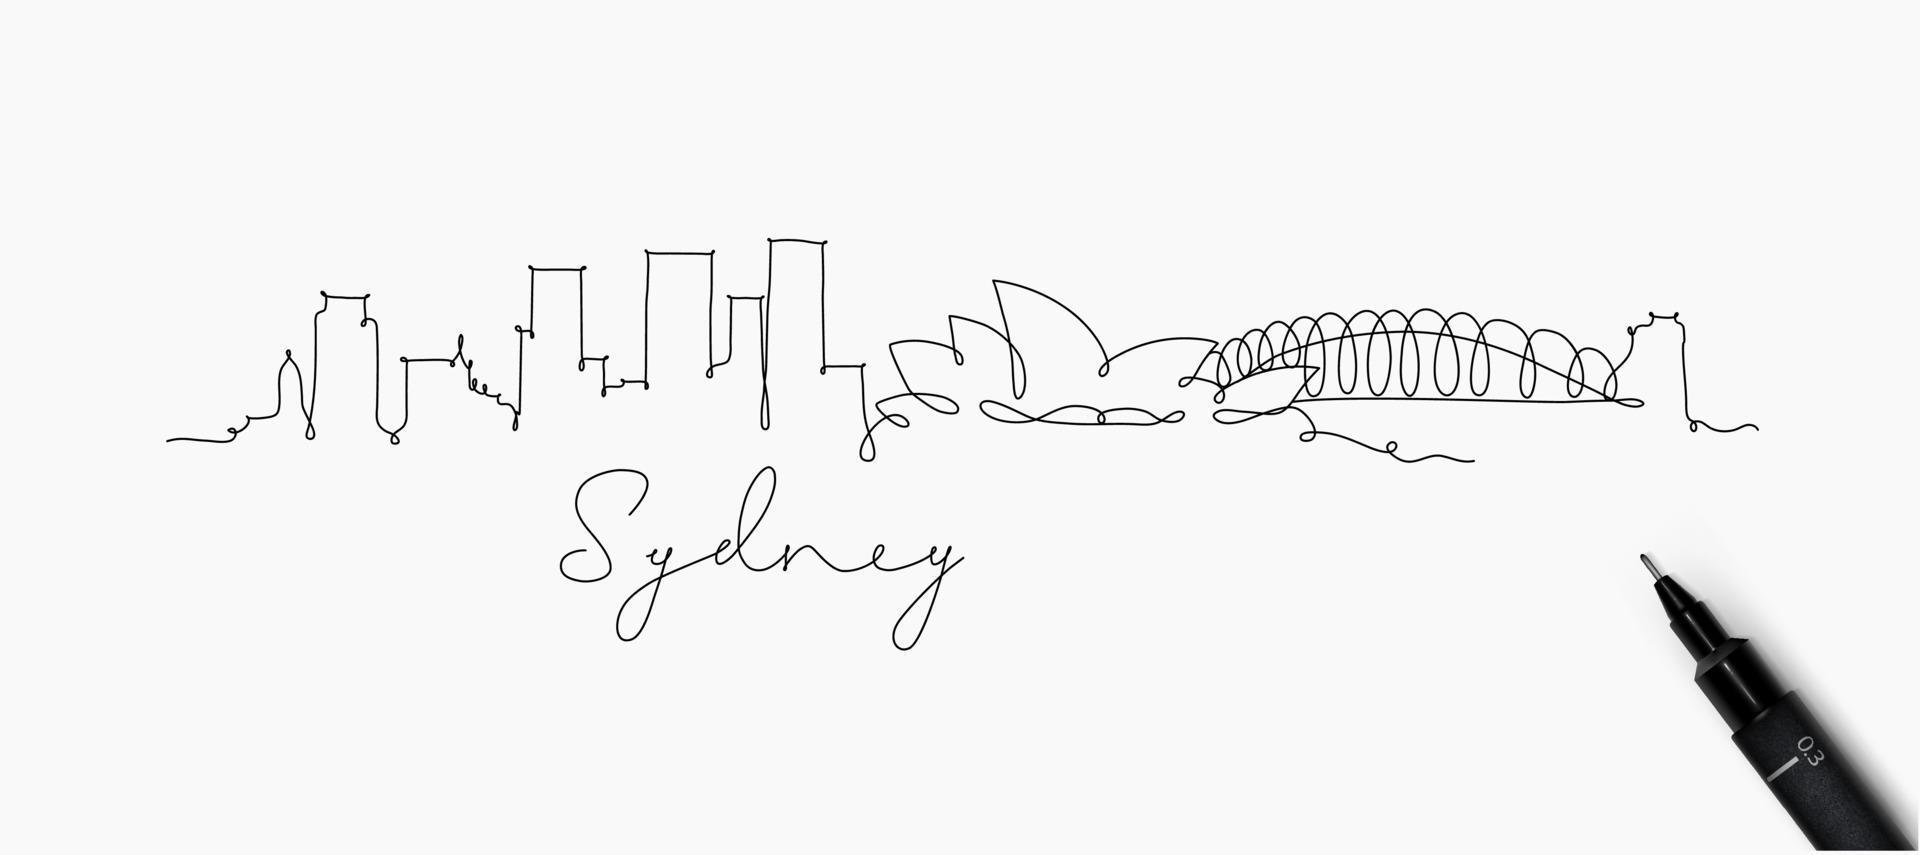 stadssiluett sydney i penn linje stil ritning med svarta linjer på vit bakgrund vektor